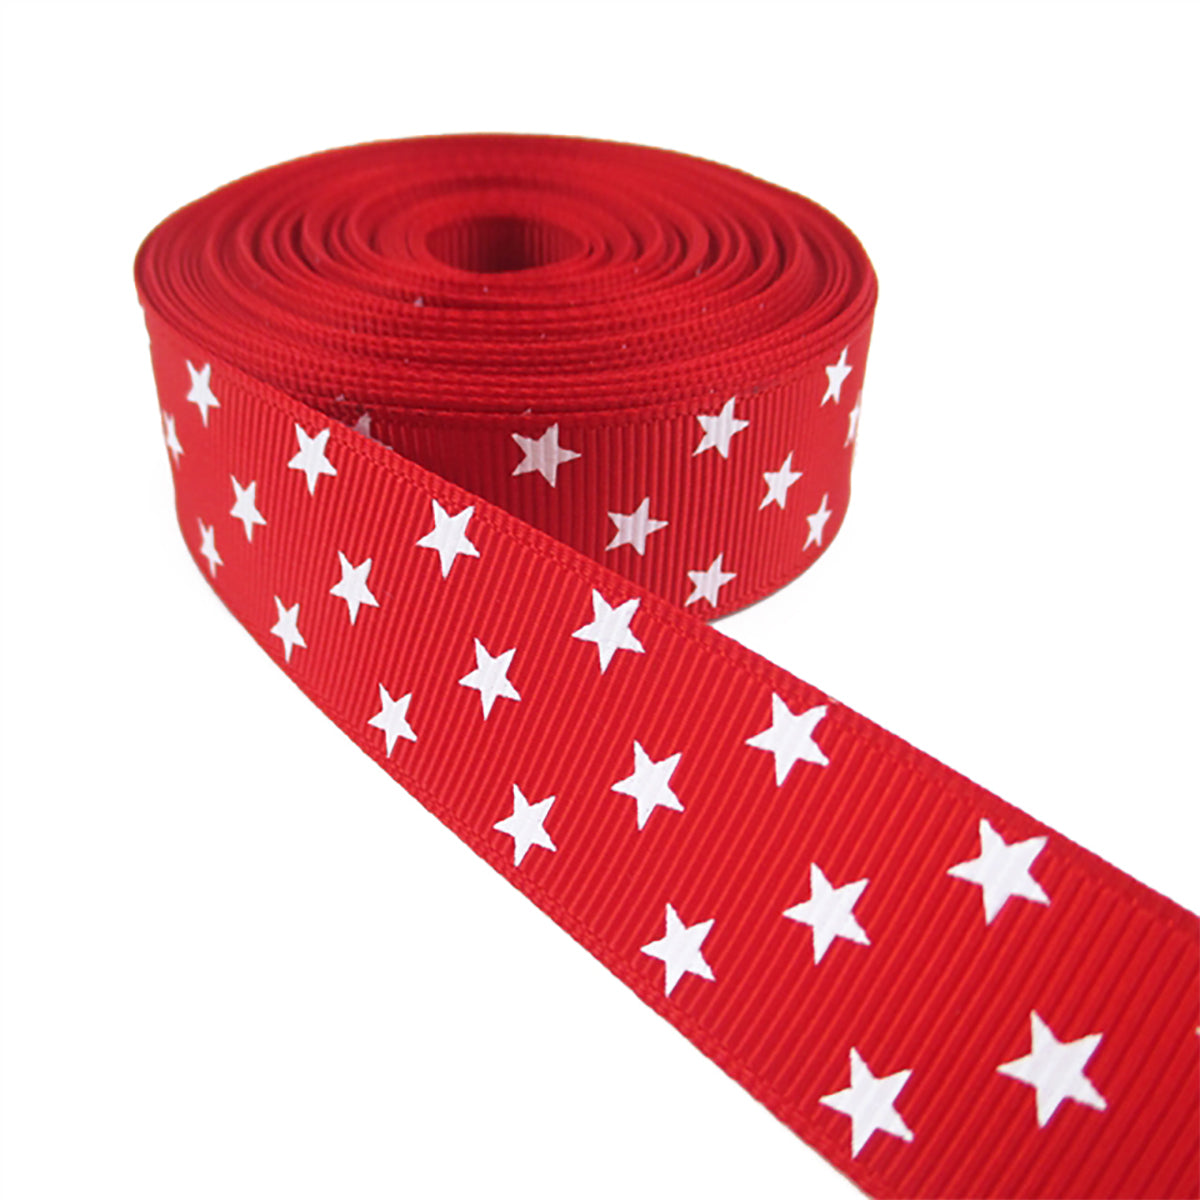 5 Yards 7/8" Patriotic Star Grosgrain Ribbon Red Royal or Navy Blue DIY Bows Crafts